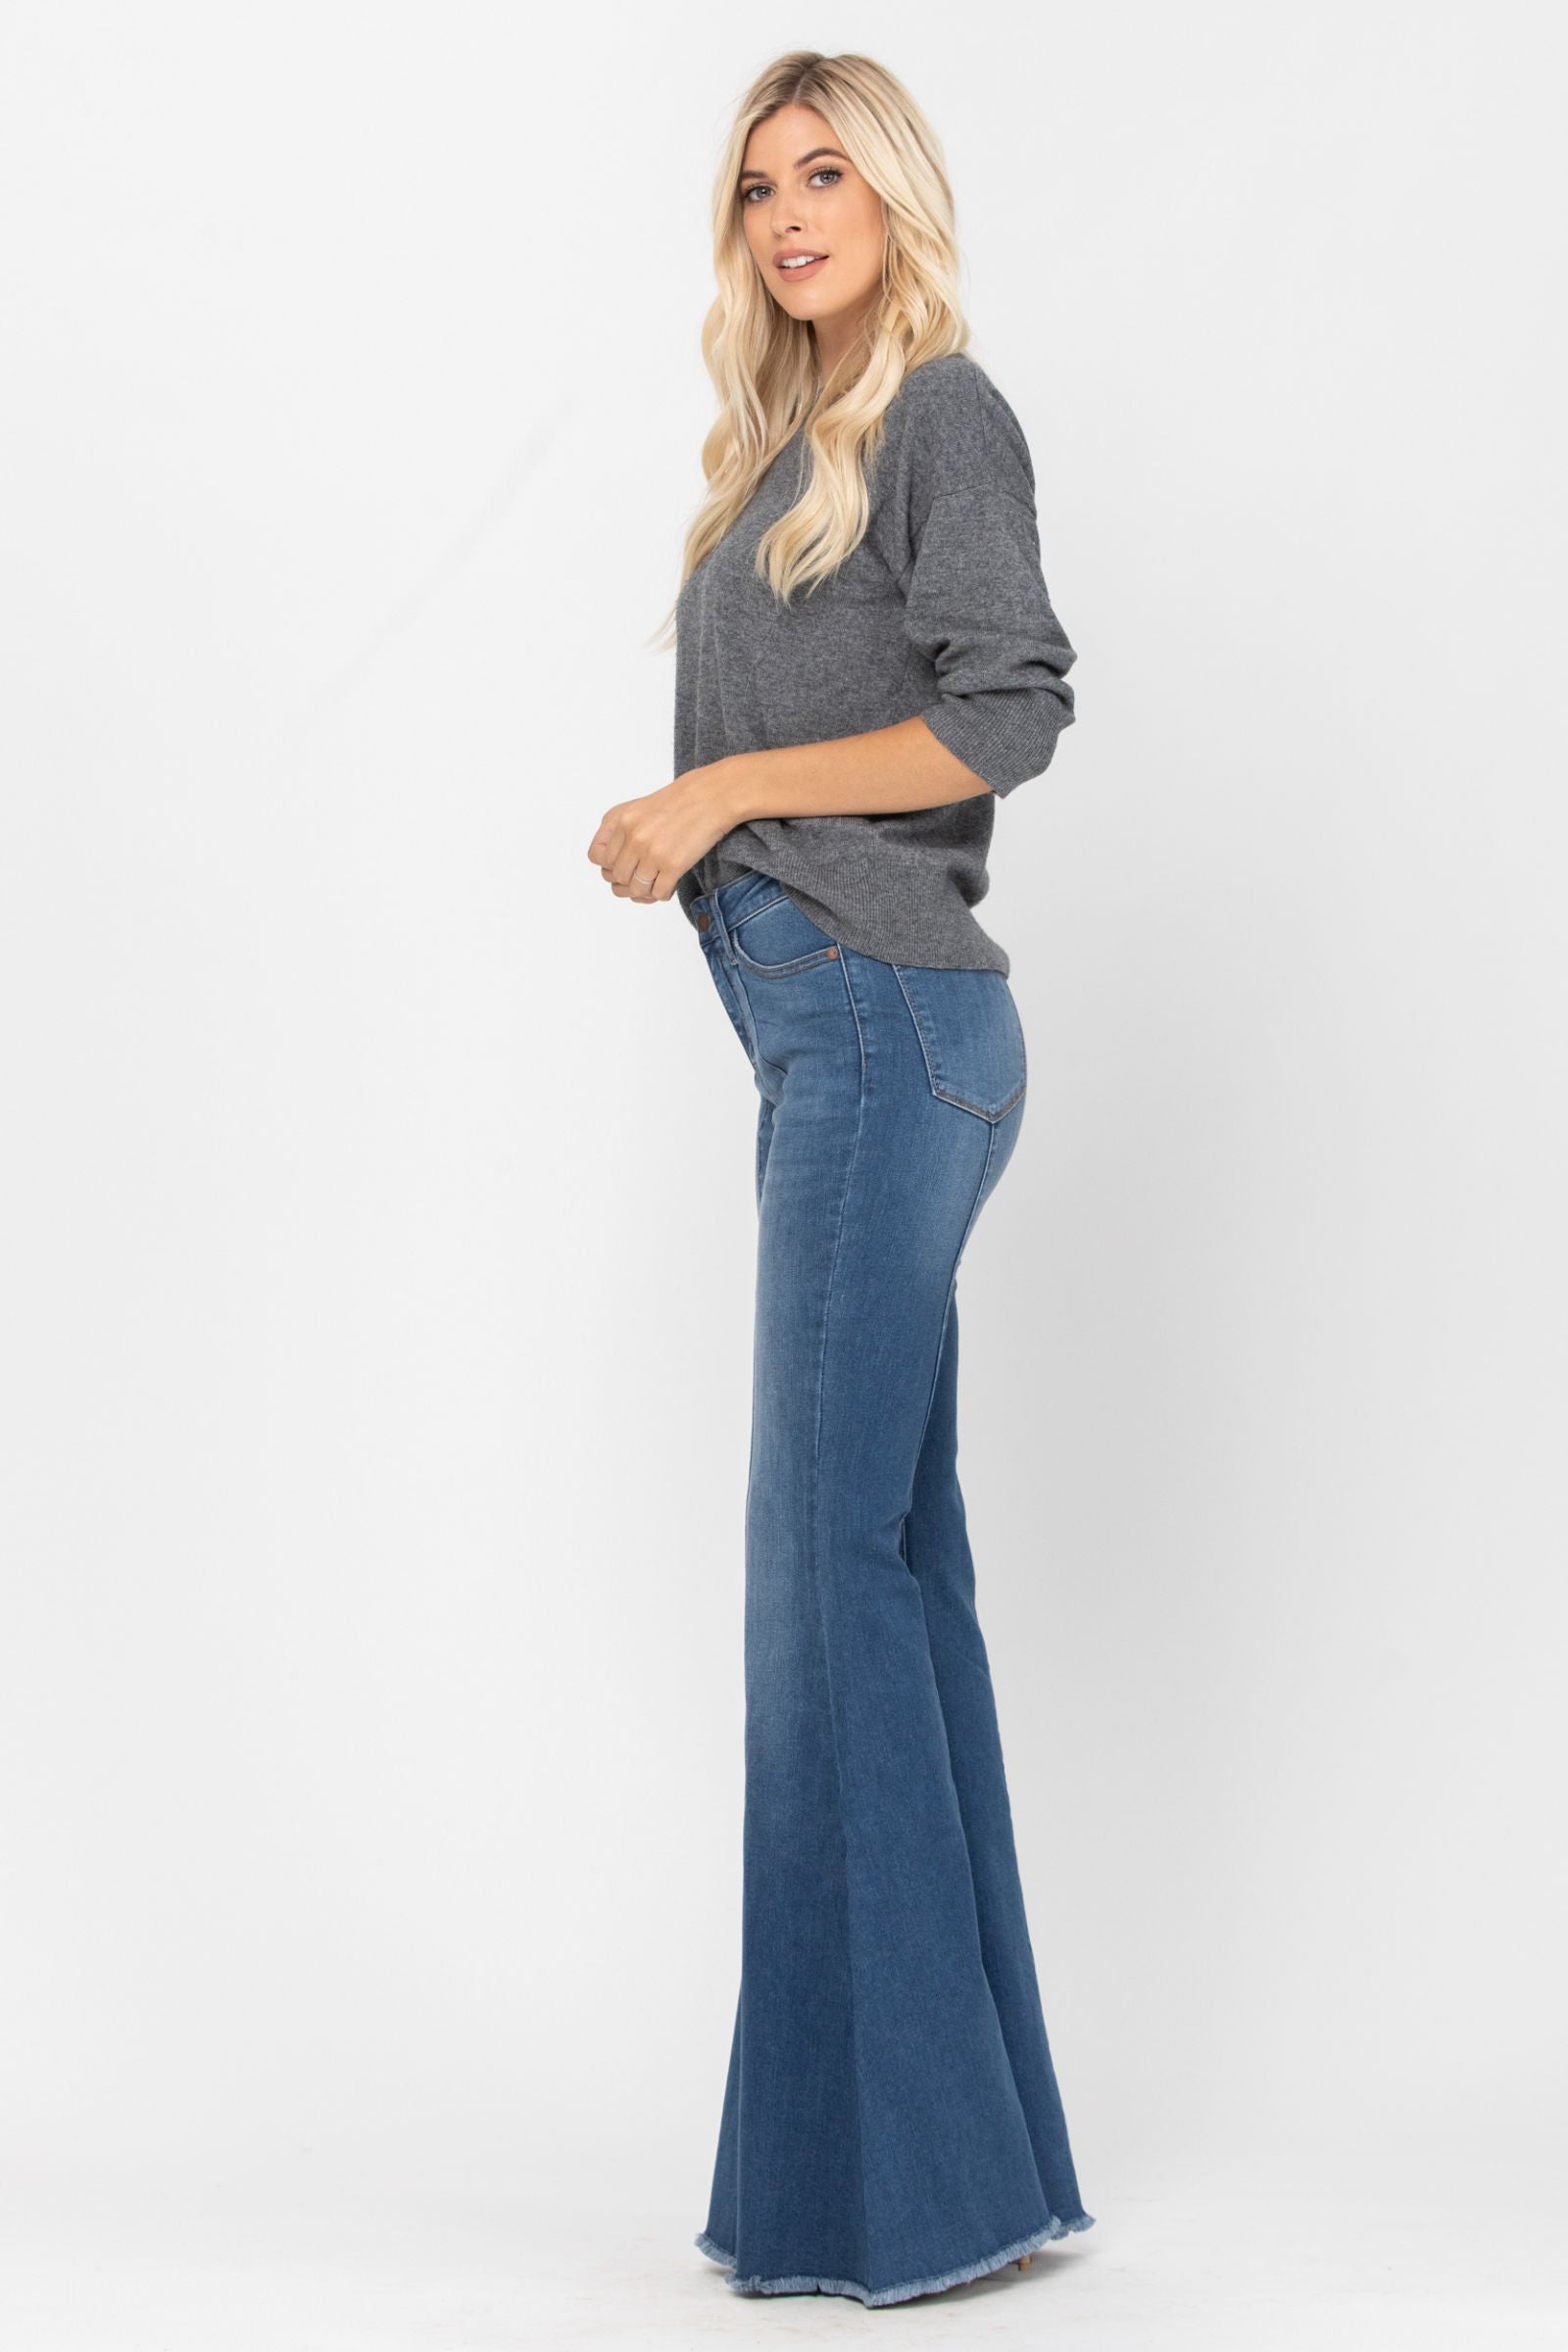 Judy Blue Jeans 88204